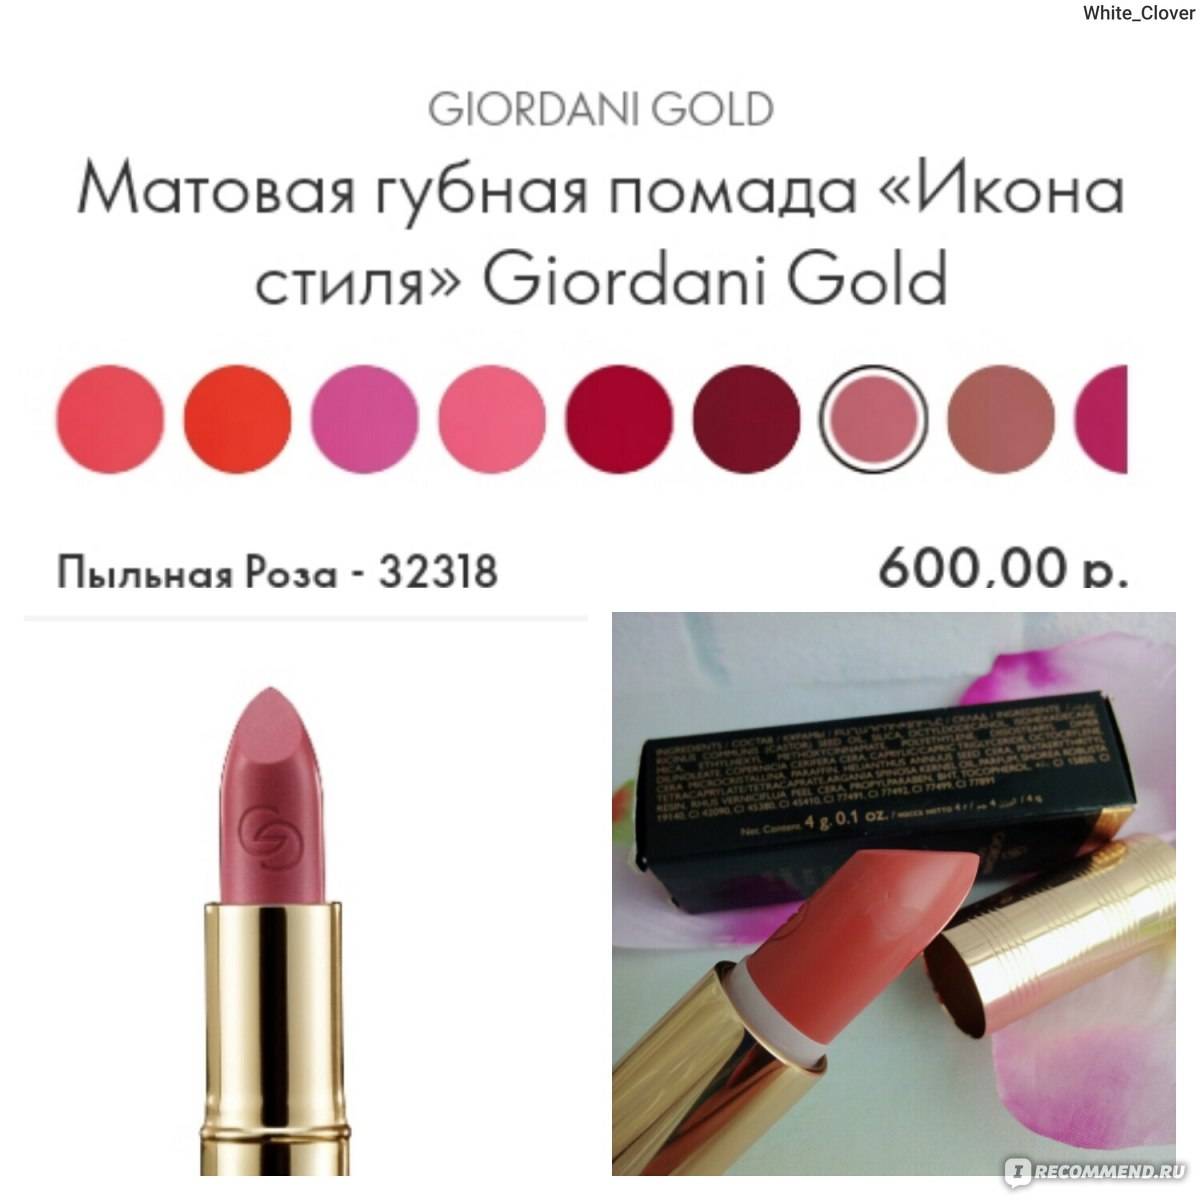 Матовая губная помада oriflame giordani gold "икона стиля" - отзывы на i-otzovik.ru